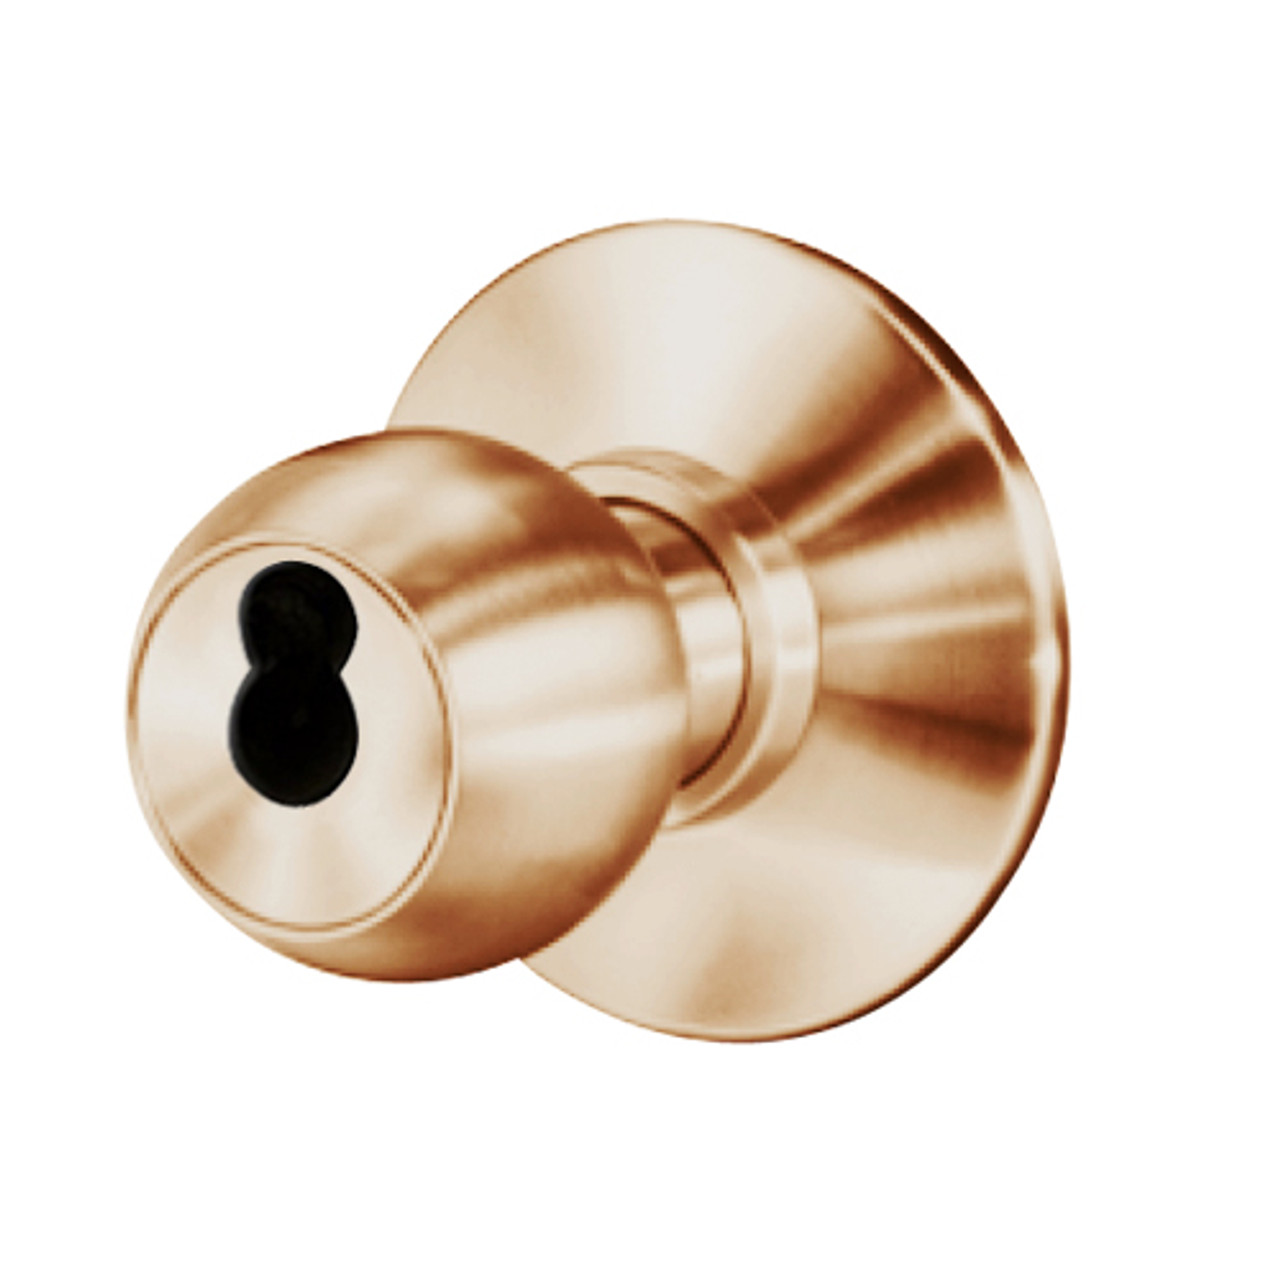 8K37B4DS3612 Best 8K Series Office Heavy Duty Cylindrical Knob Locks with Round Style in Satin Bronze